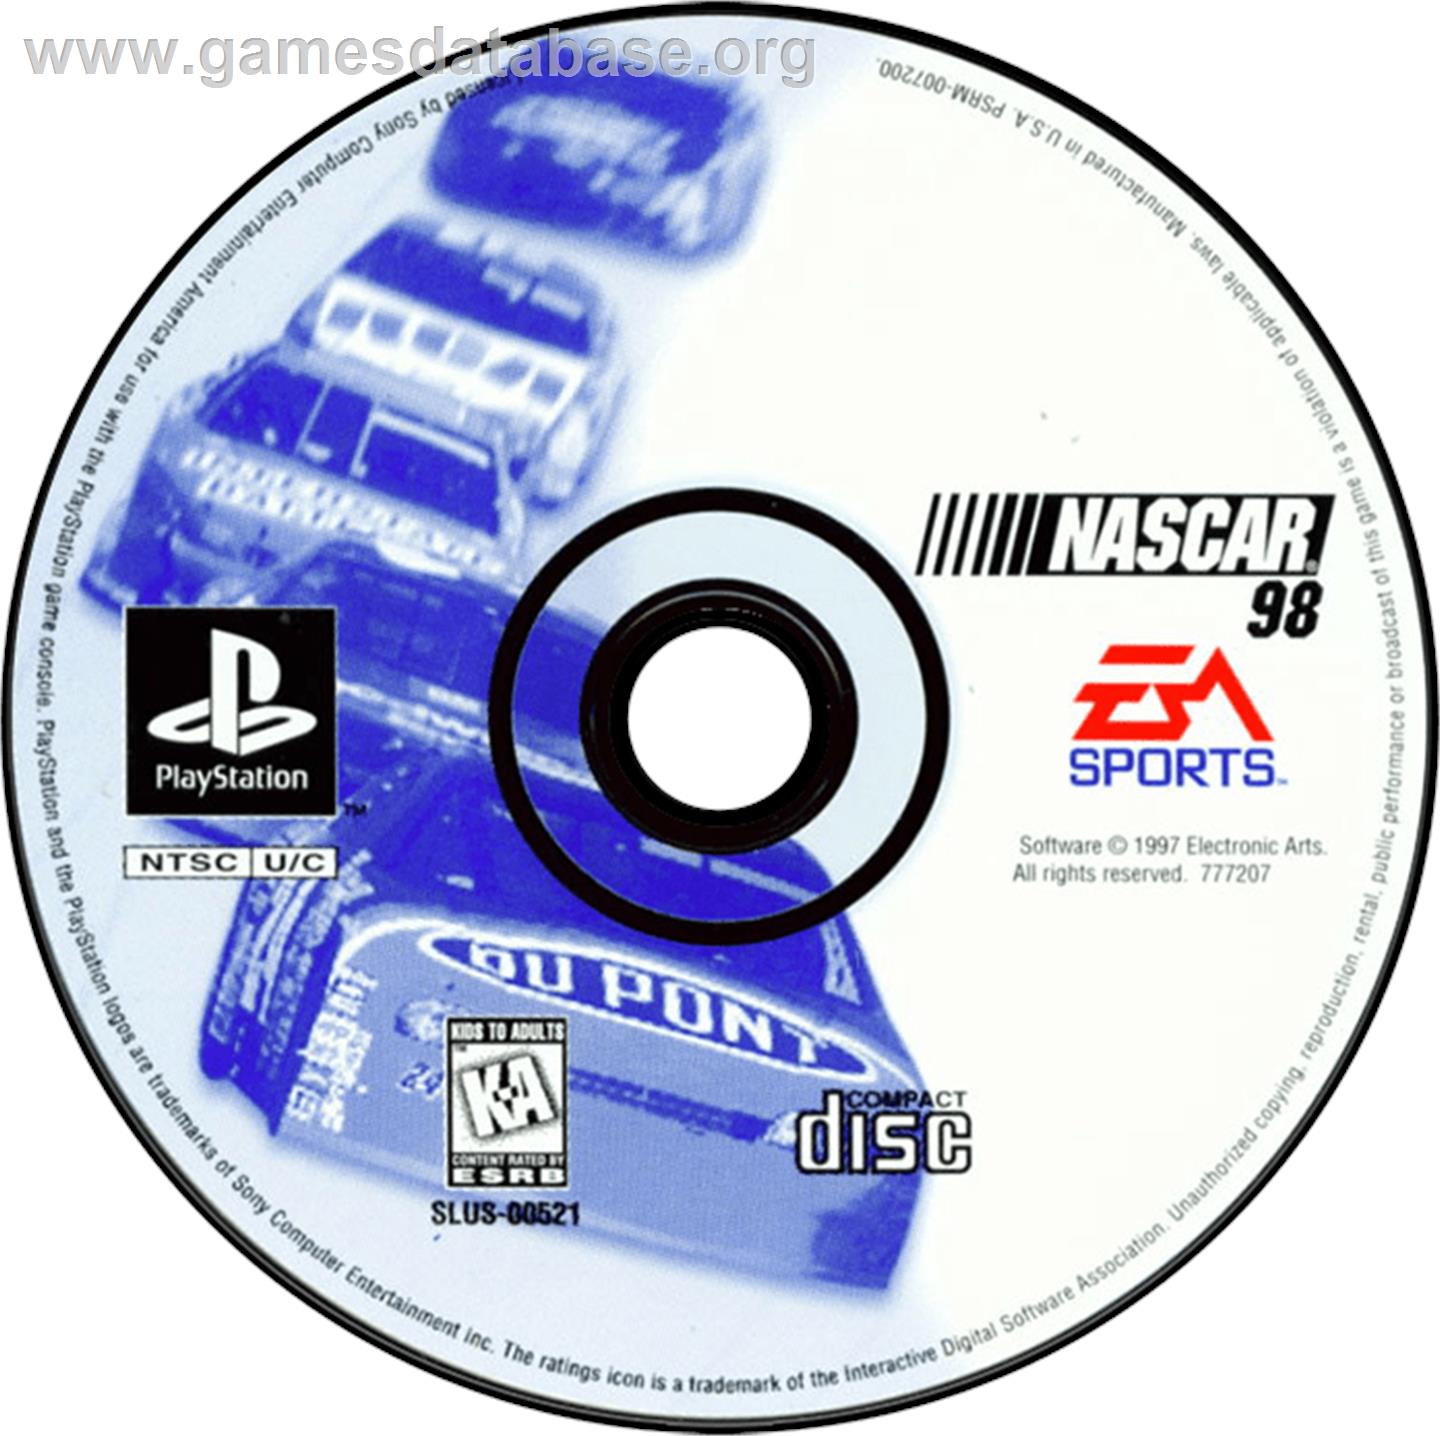 NASCAR 98 (Collector's Edition) - Sony Playstation - Artwork - Disc